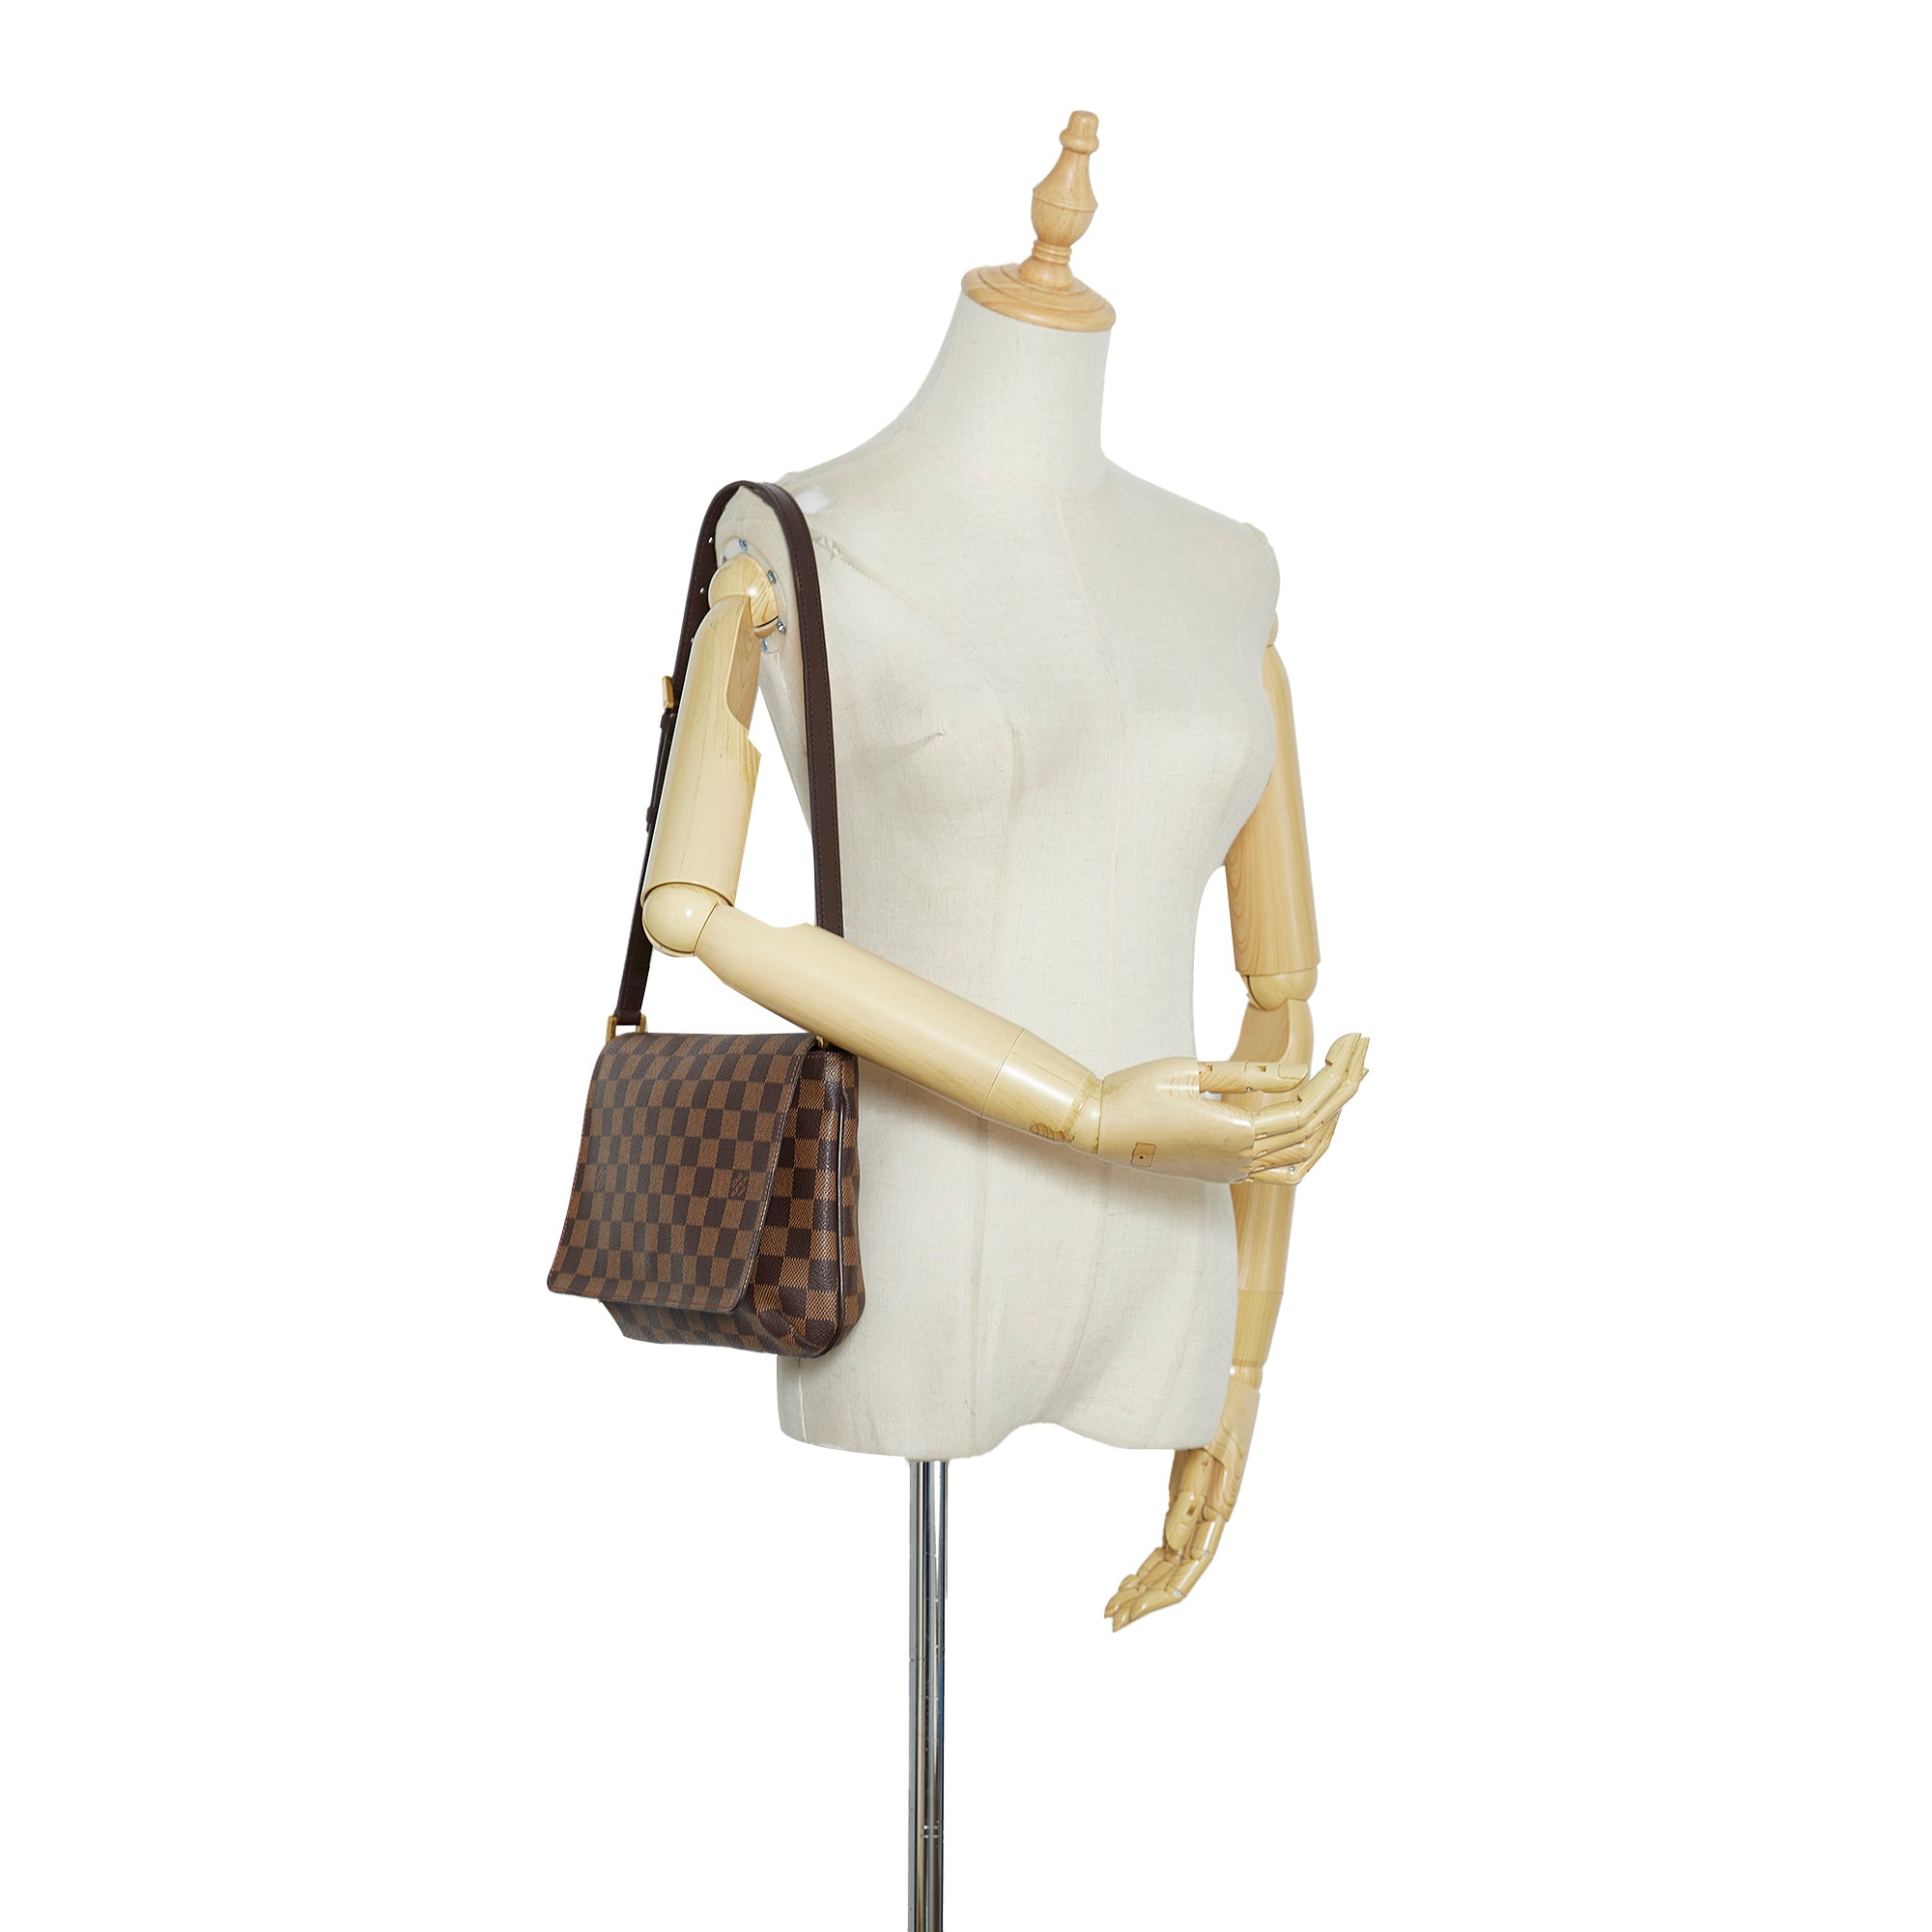 Brown Damier Ebene Crossbody Strap for Louis Vuitton Pochette Accessoires